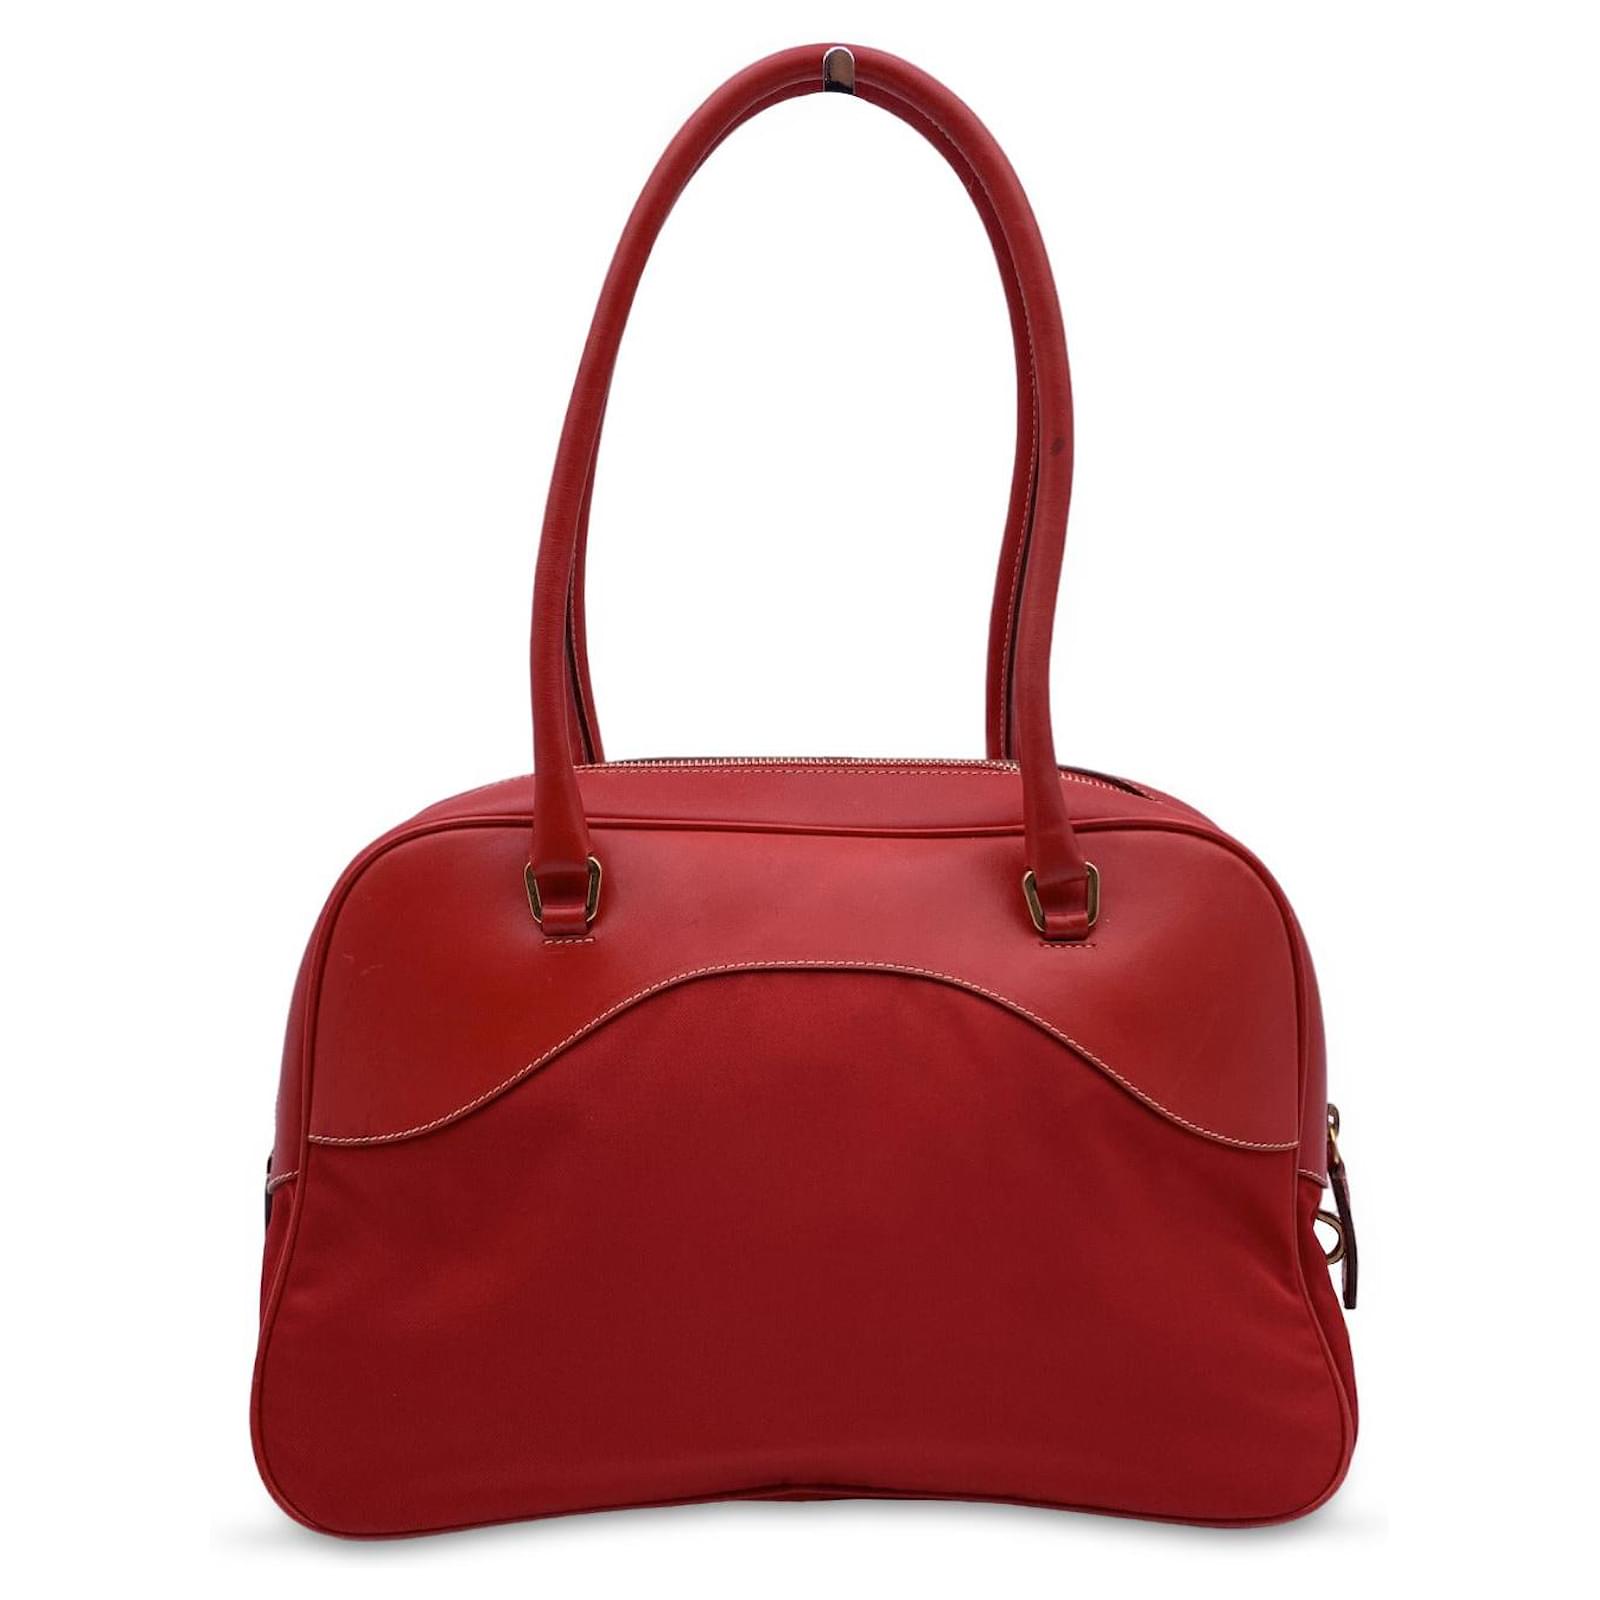 Prada - Women's Fabric Handbag With Leather - (Black)